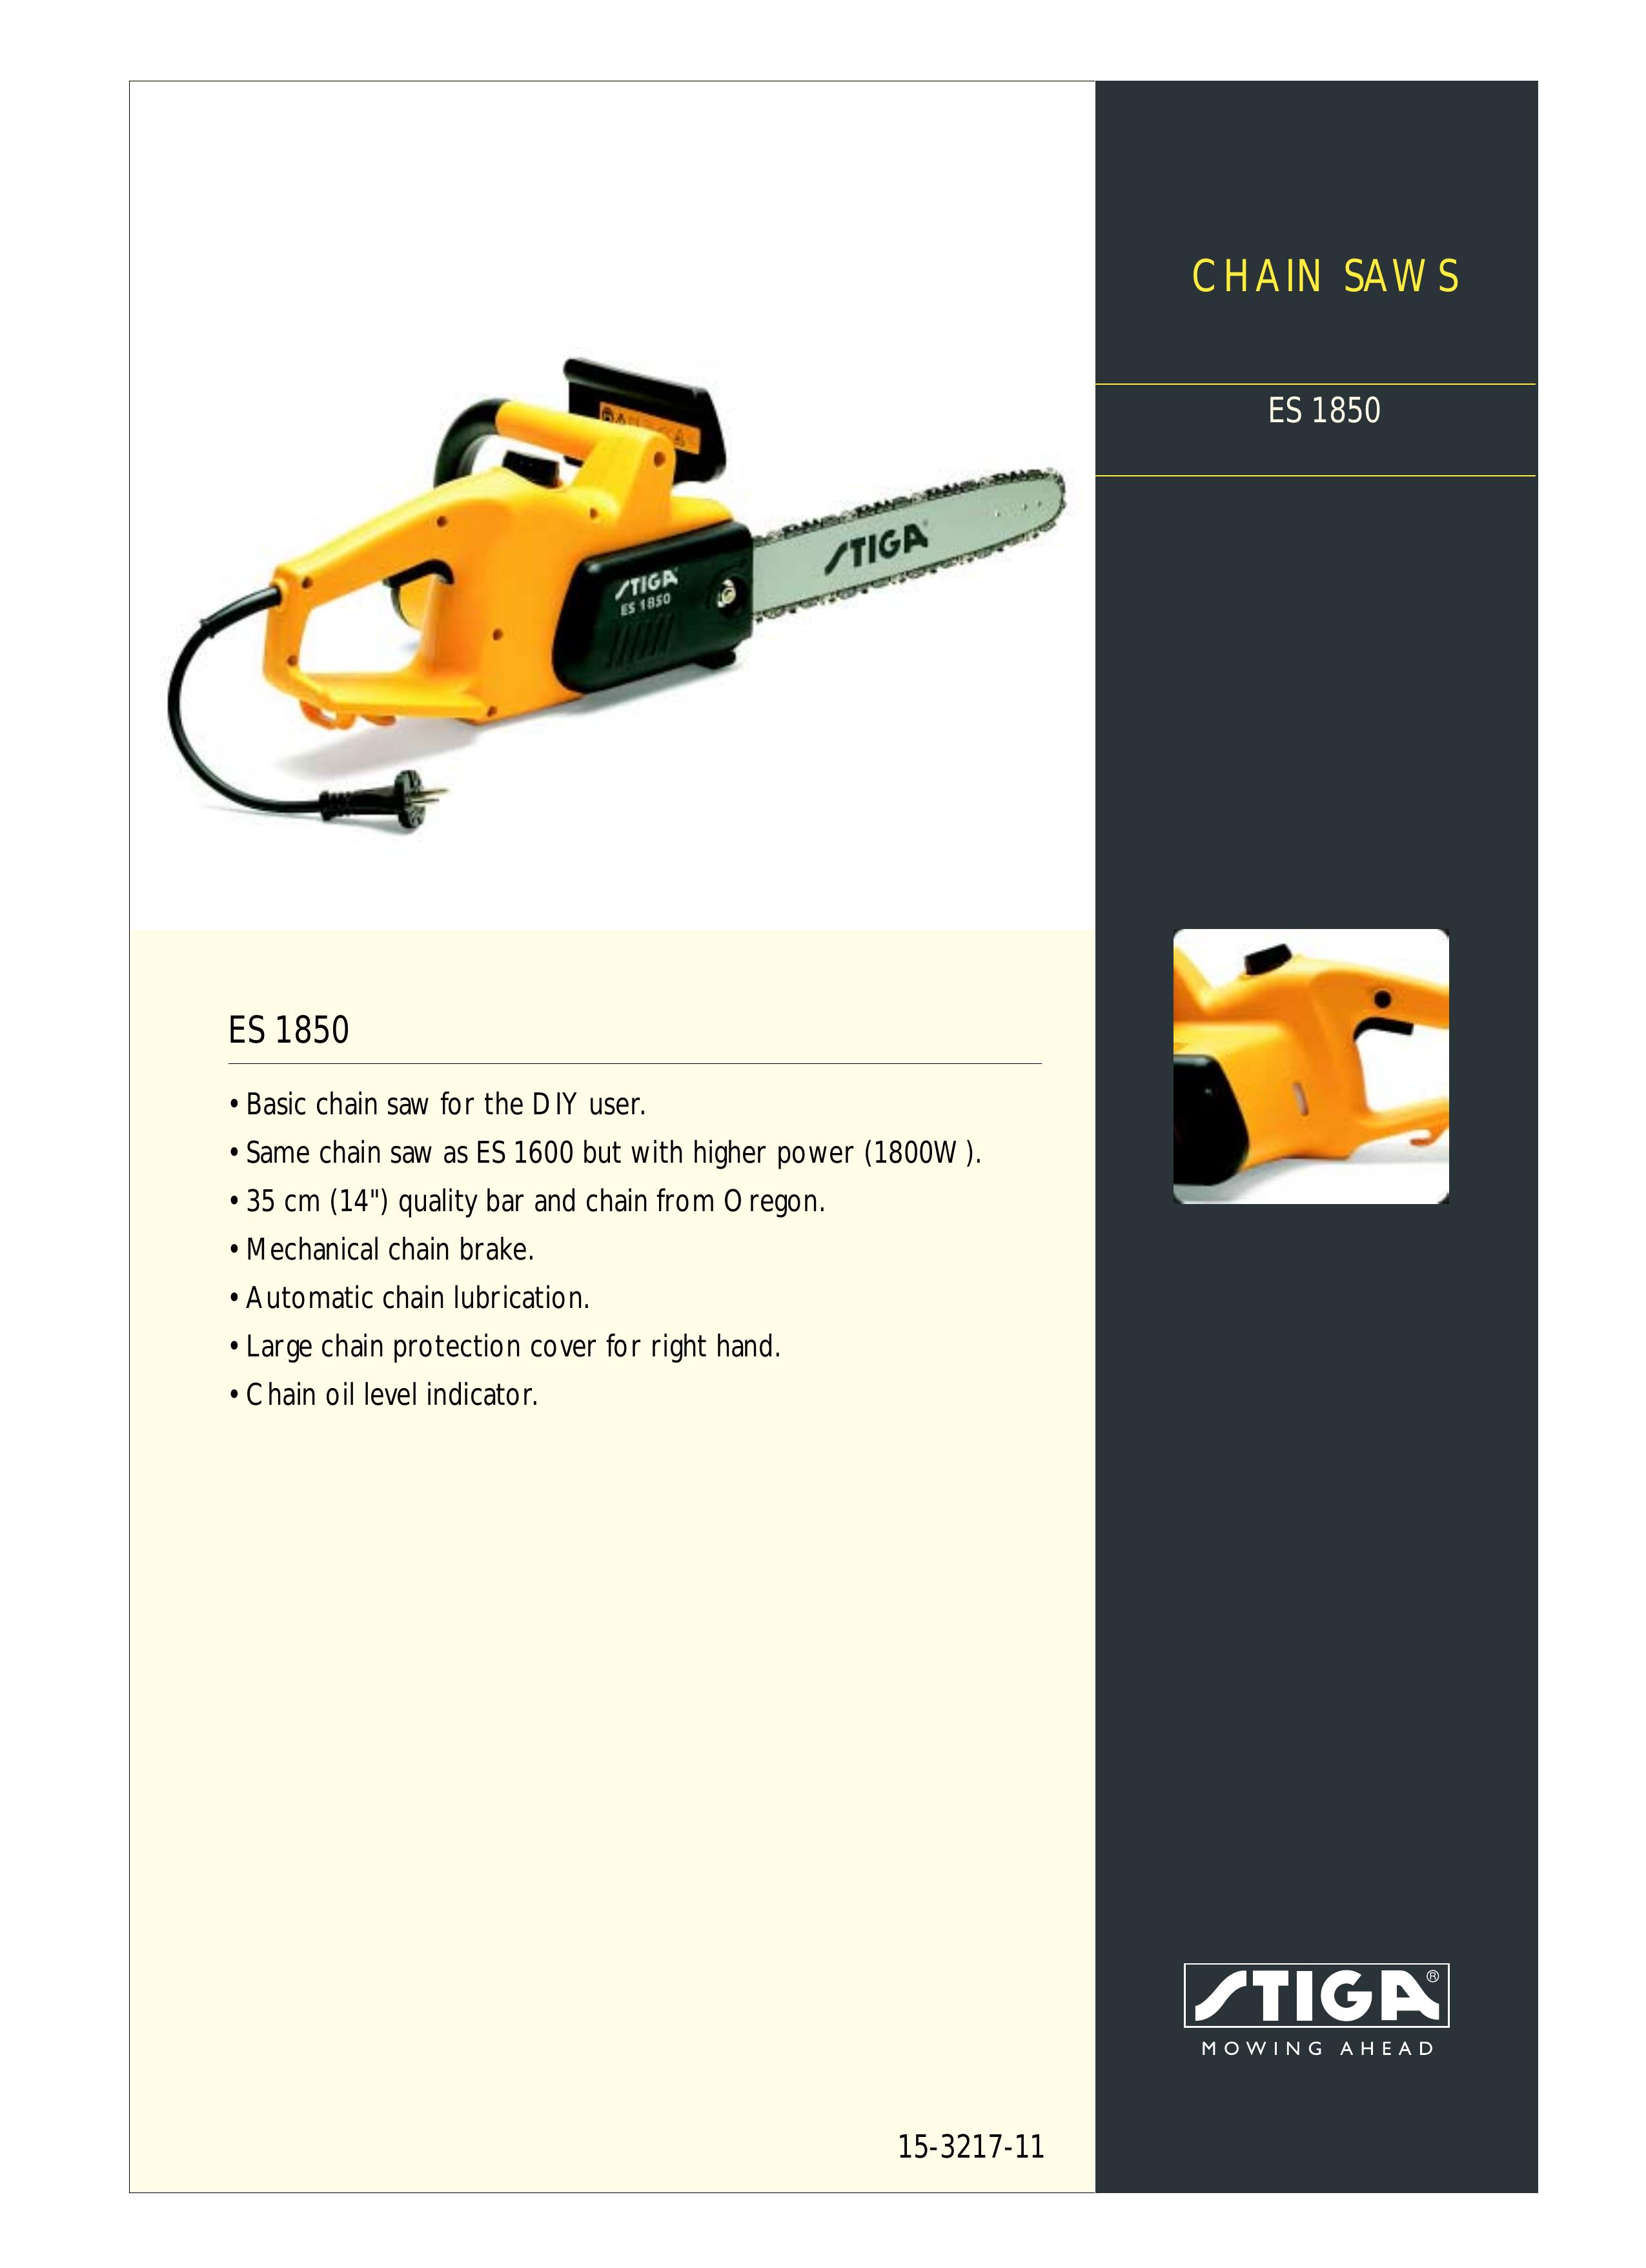 Stiga ES 1850 Chainsaw User Manual